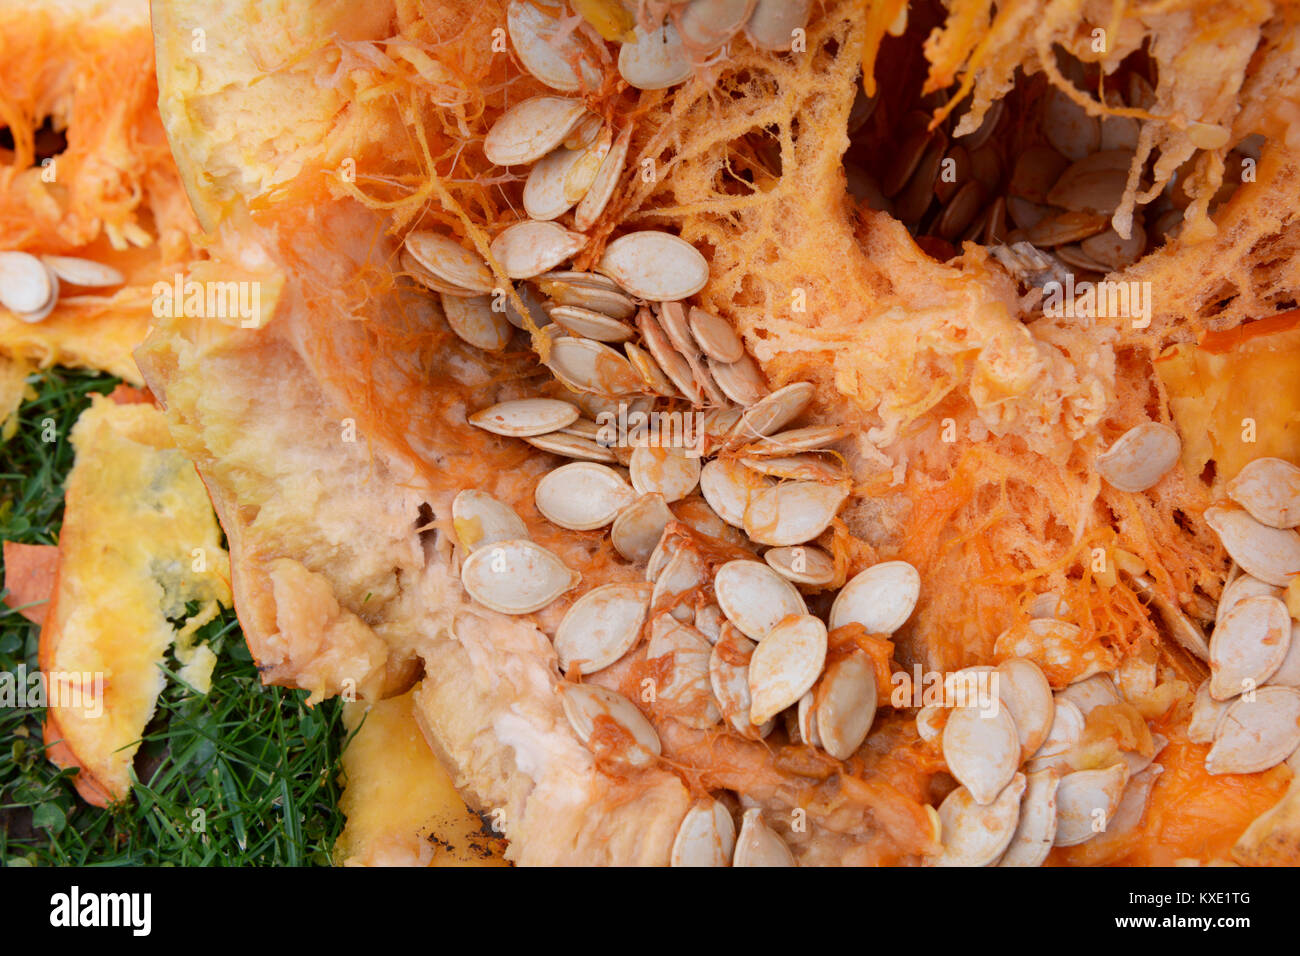 Numerous oval pumpkin seeds among stringy flesh inside a large orange pumpkin, on grass Stock Photo